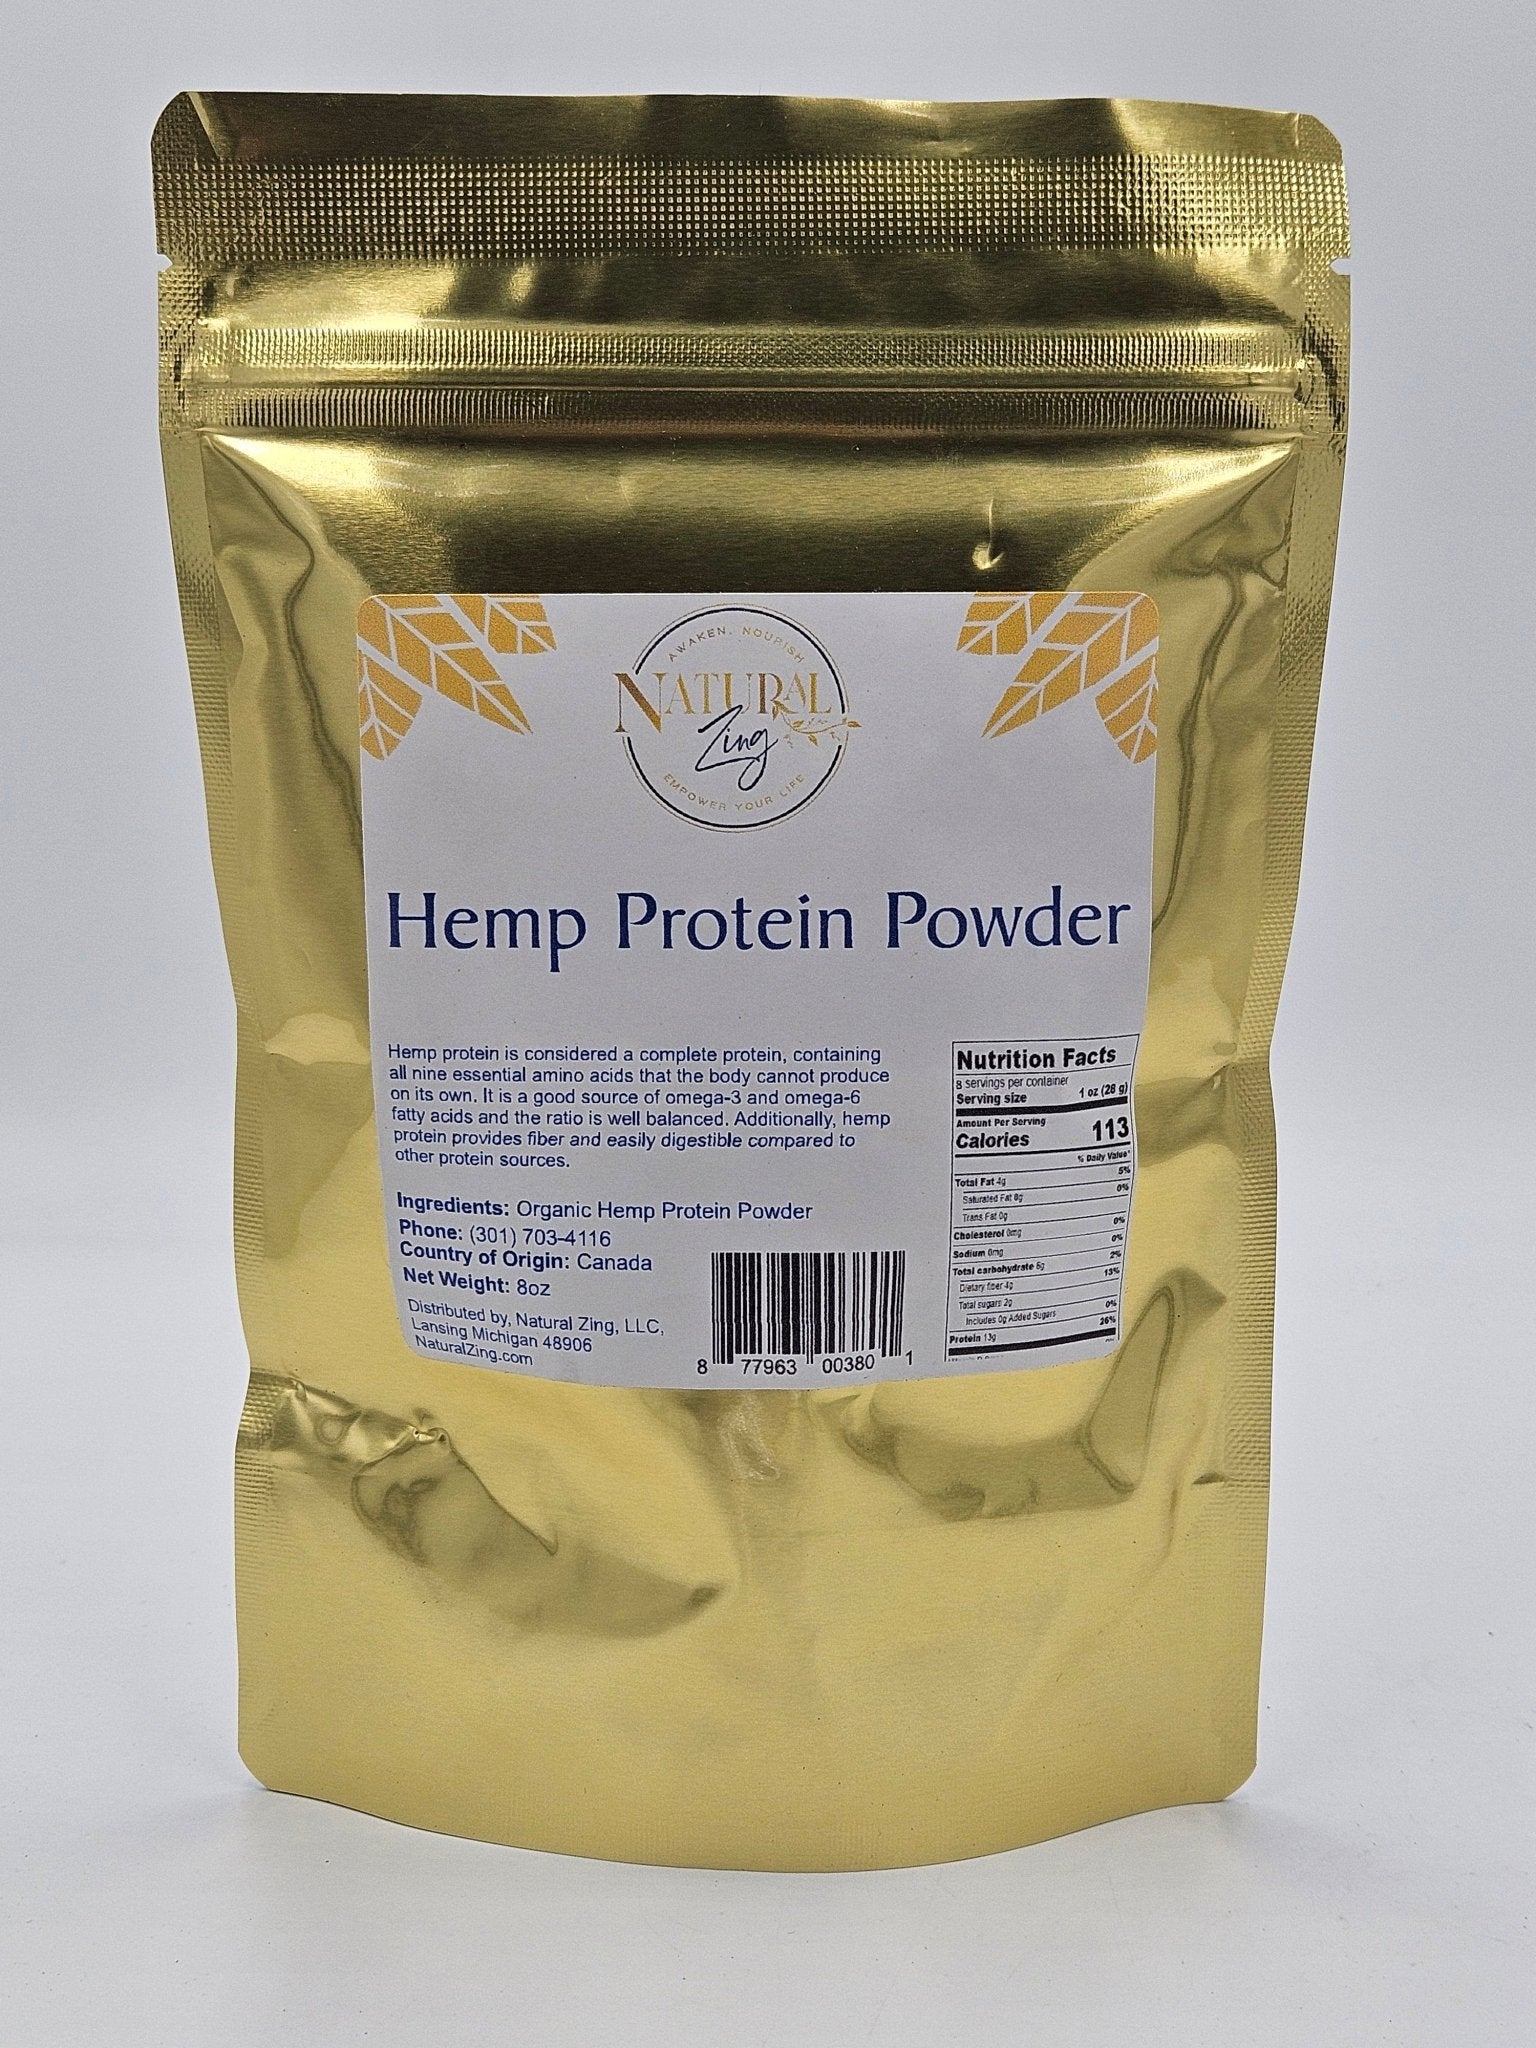 Hemp Protein Powder 8 oz - Natural Zing